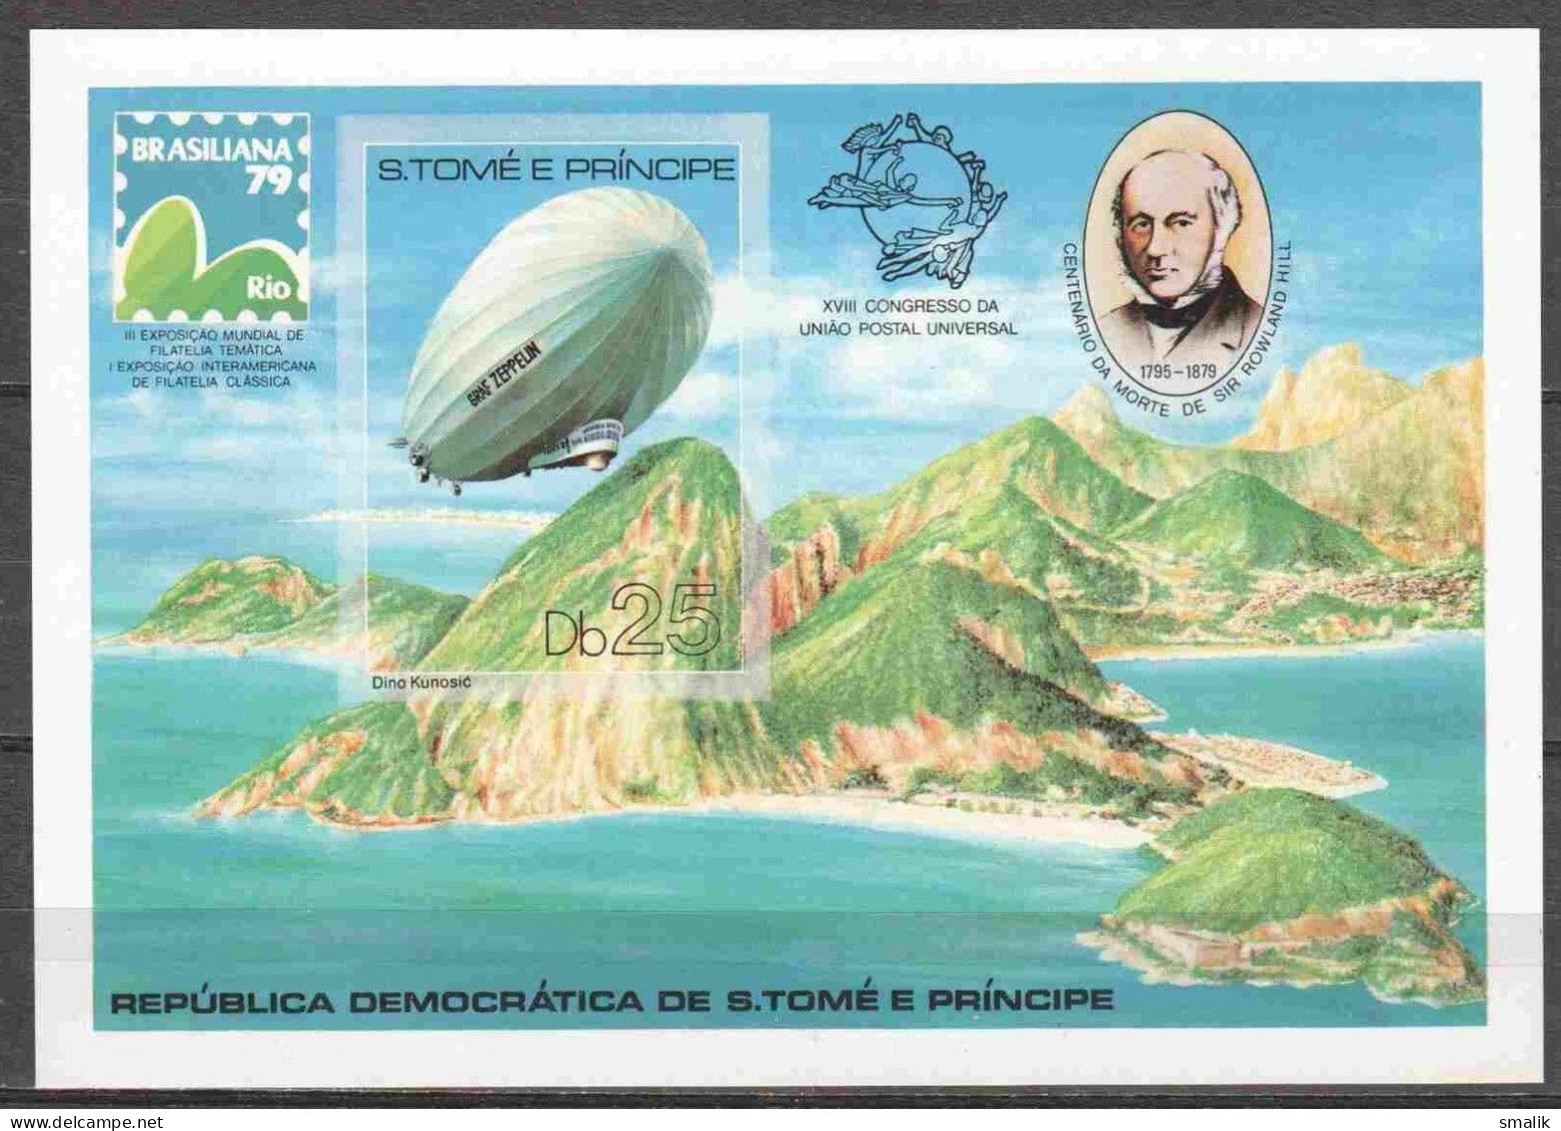 S. TOME E PRINCIPE SAO 1979 - Rowland Hill UPU, Depicting Graf Zeppelin Braziliana'79, IMPERF Miniature Sheet, MNH - Sao Tome And Principe